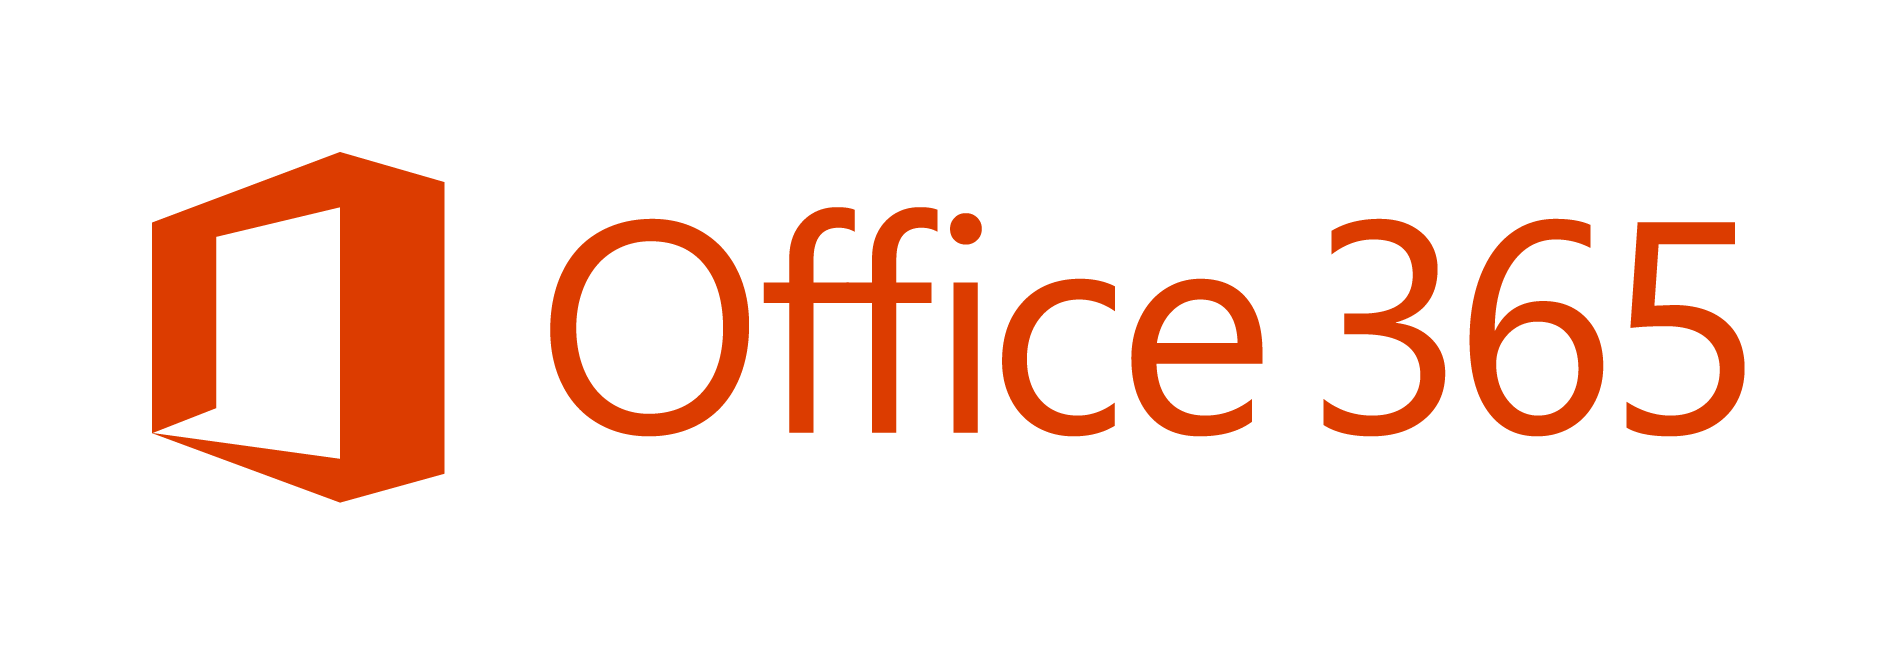 a bighter office 365 logo